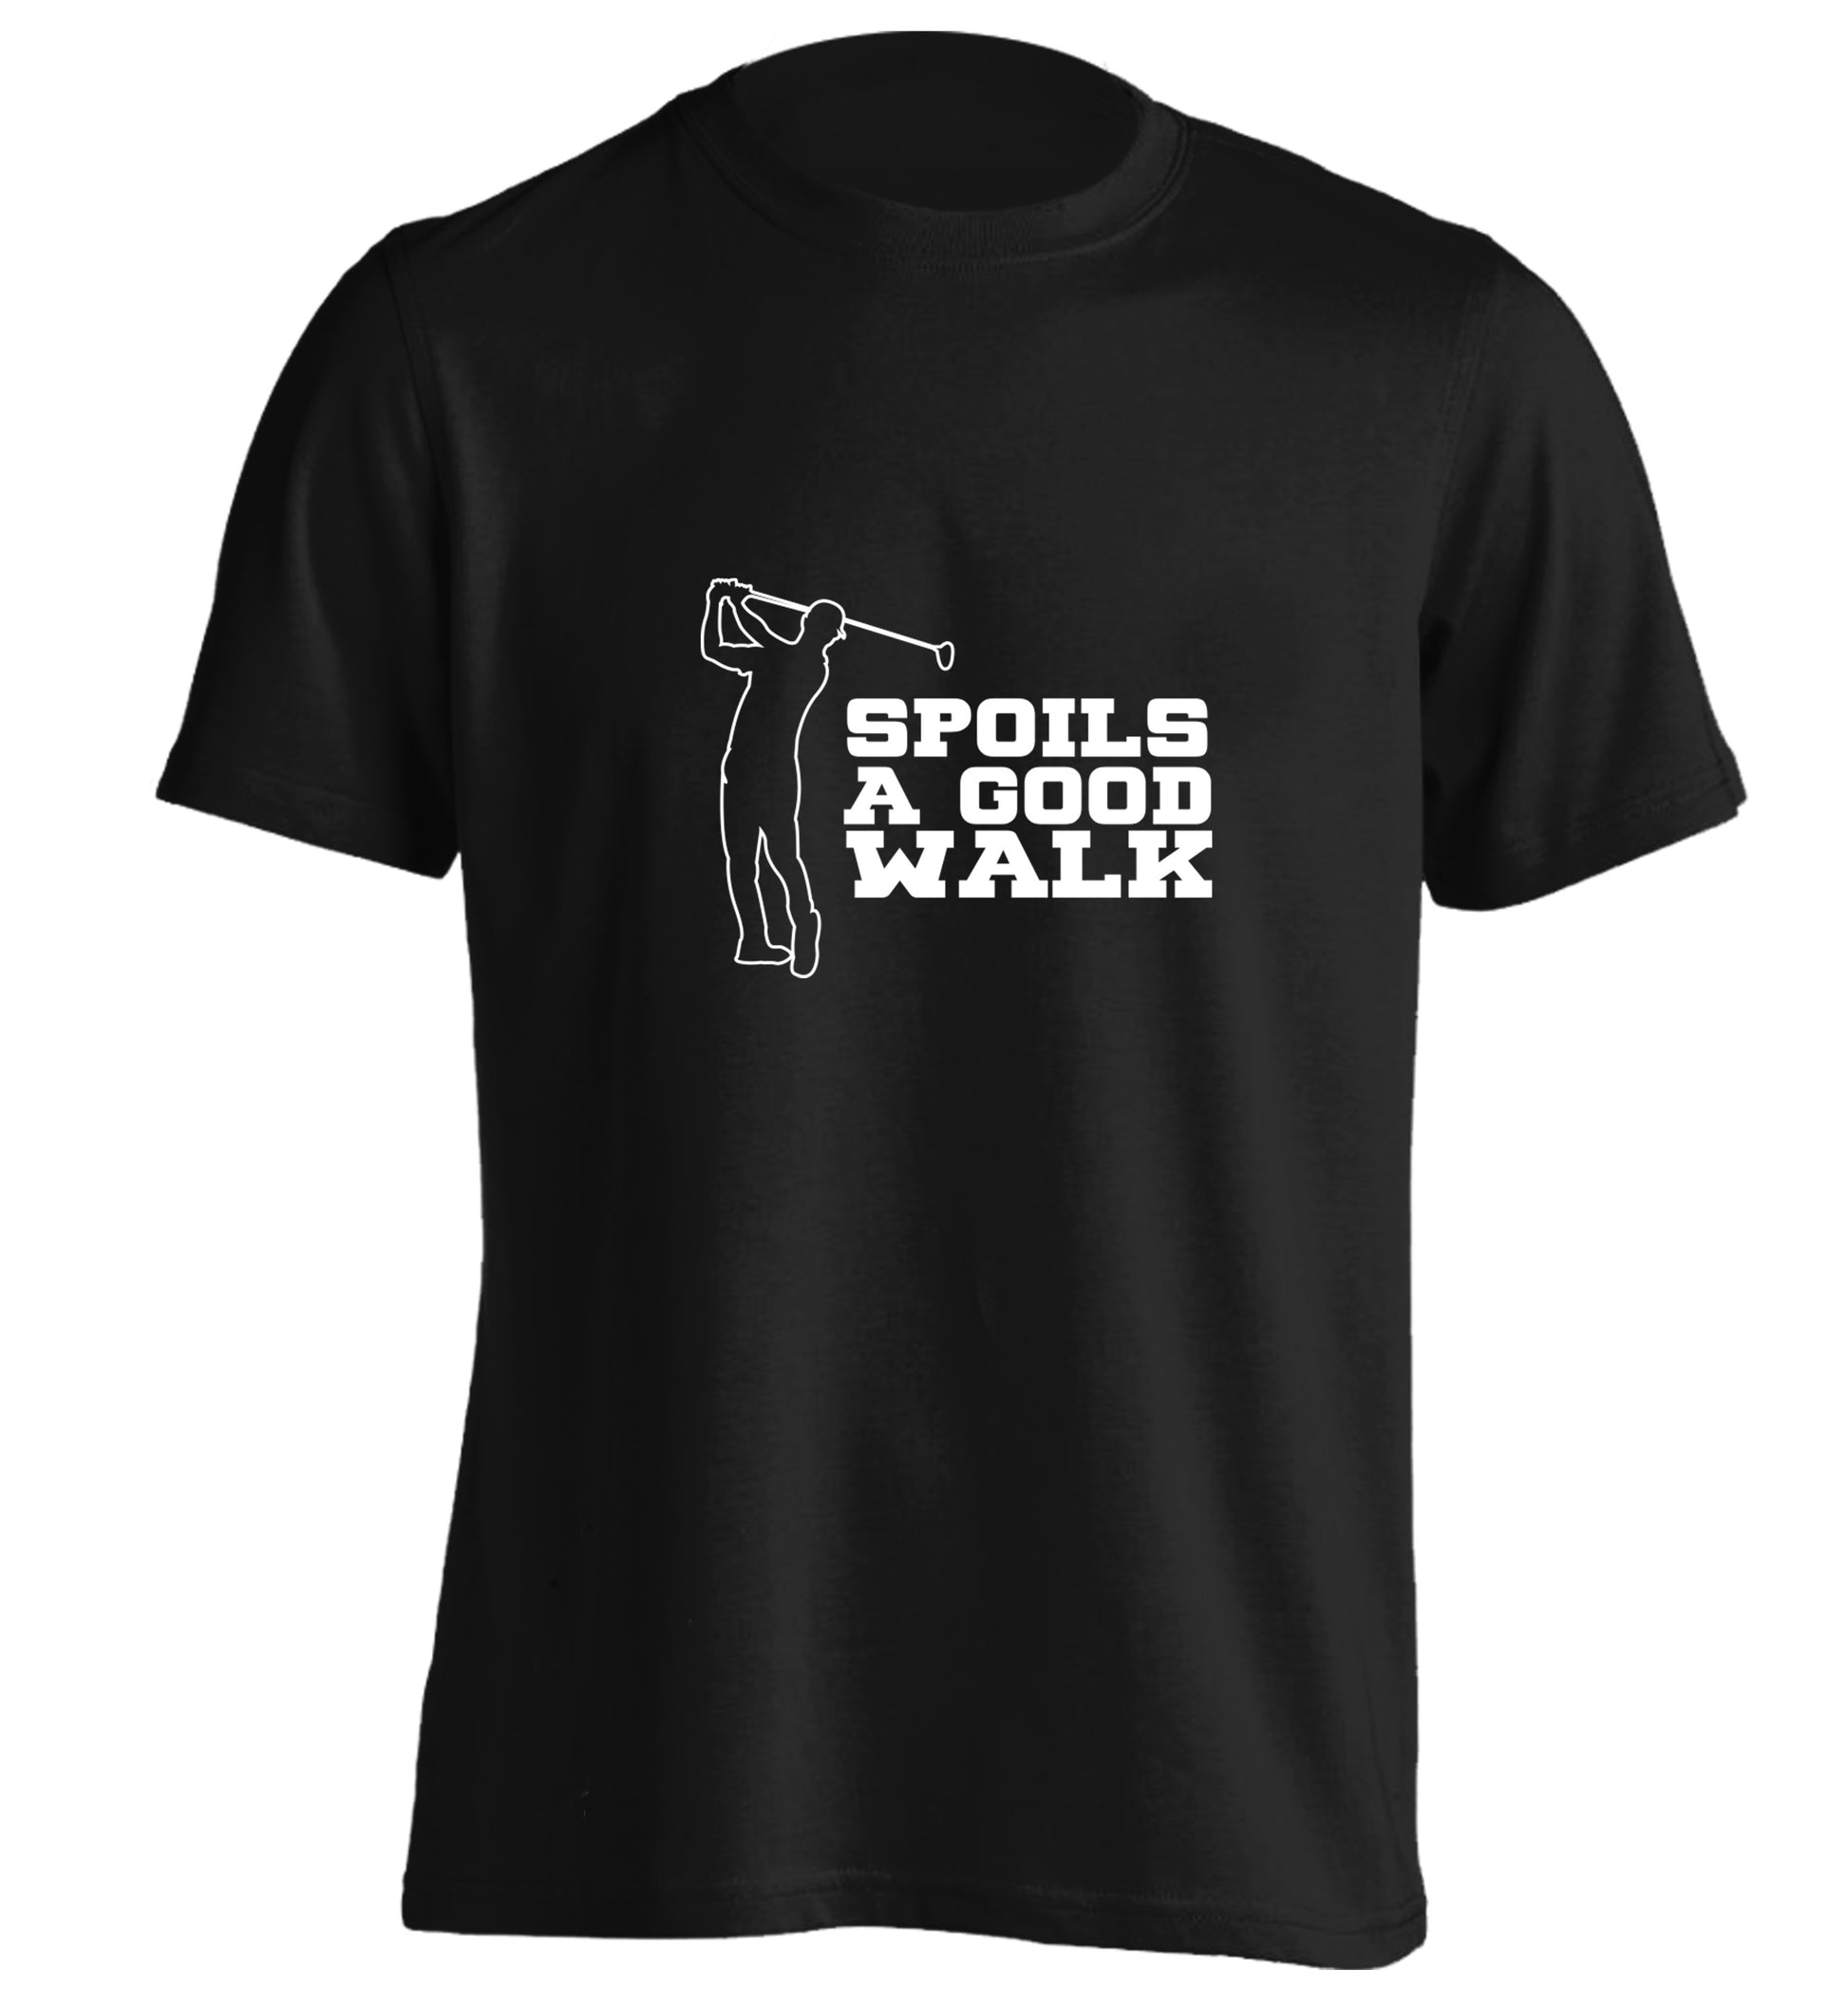 Golf spoils a good walk adults unisex black Tshirt 2XL